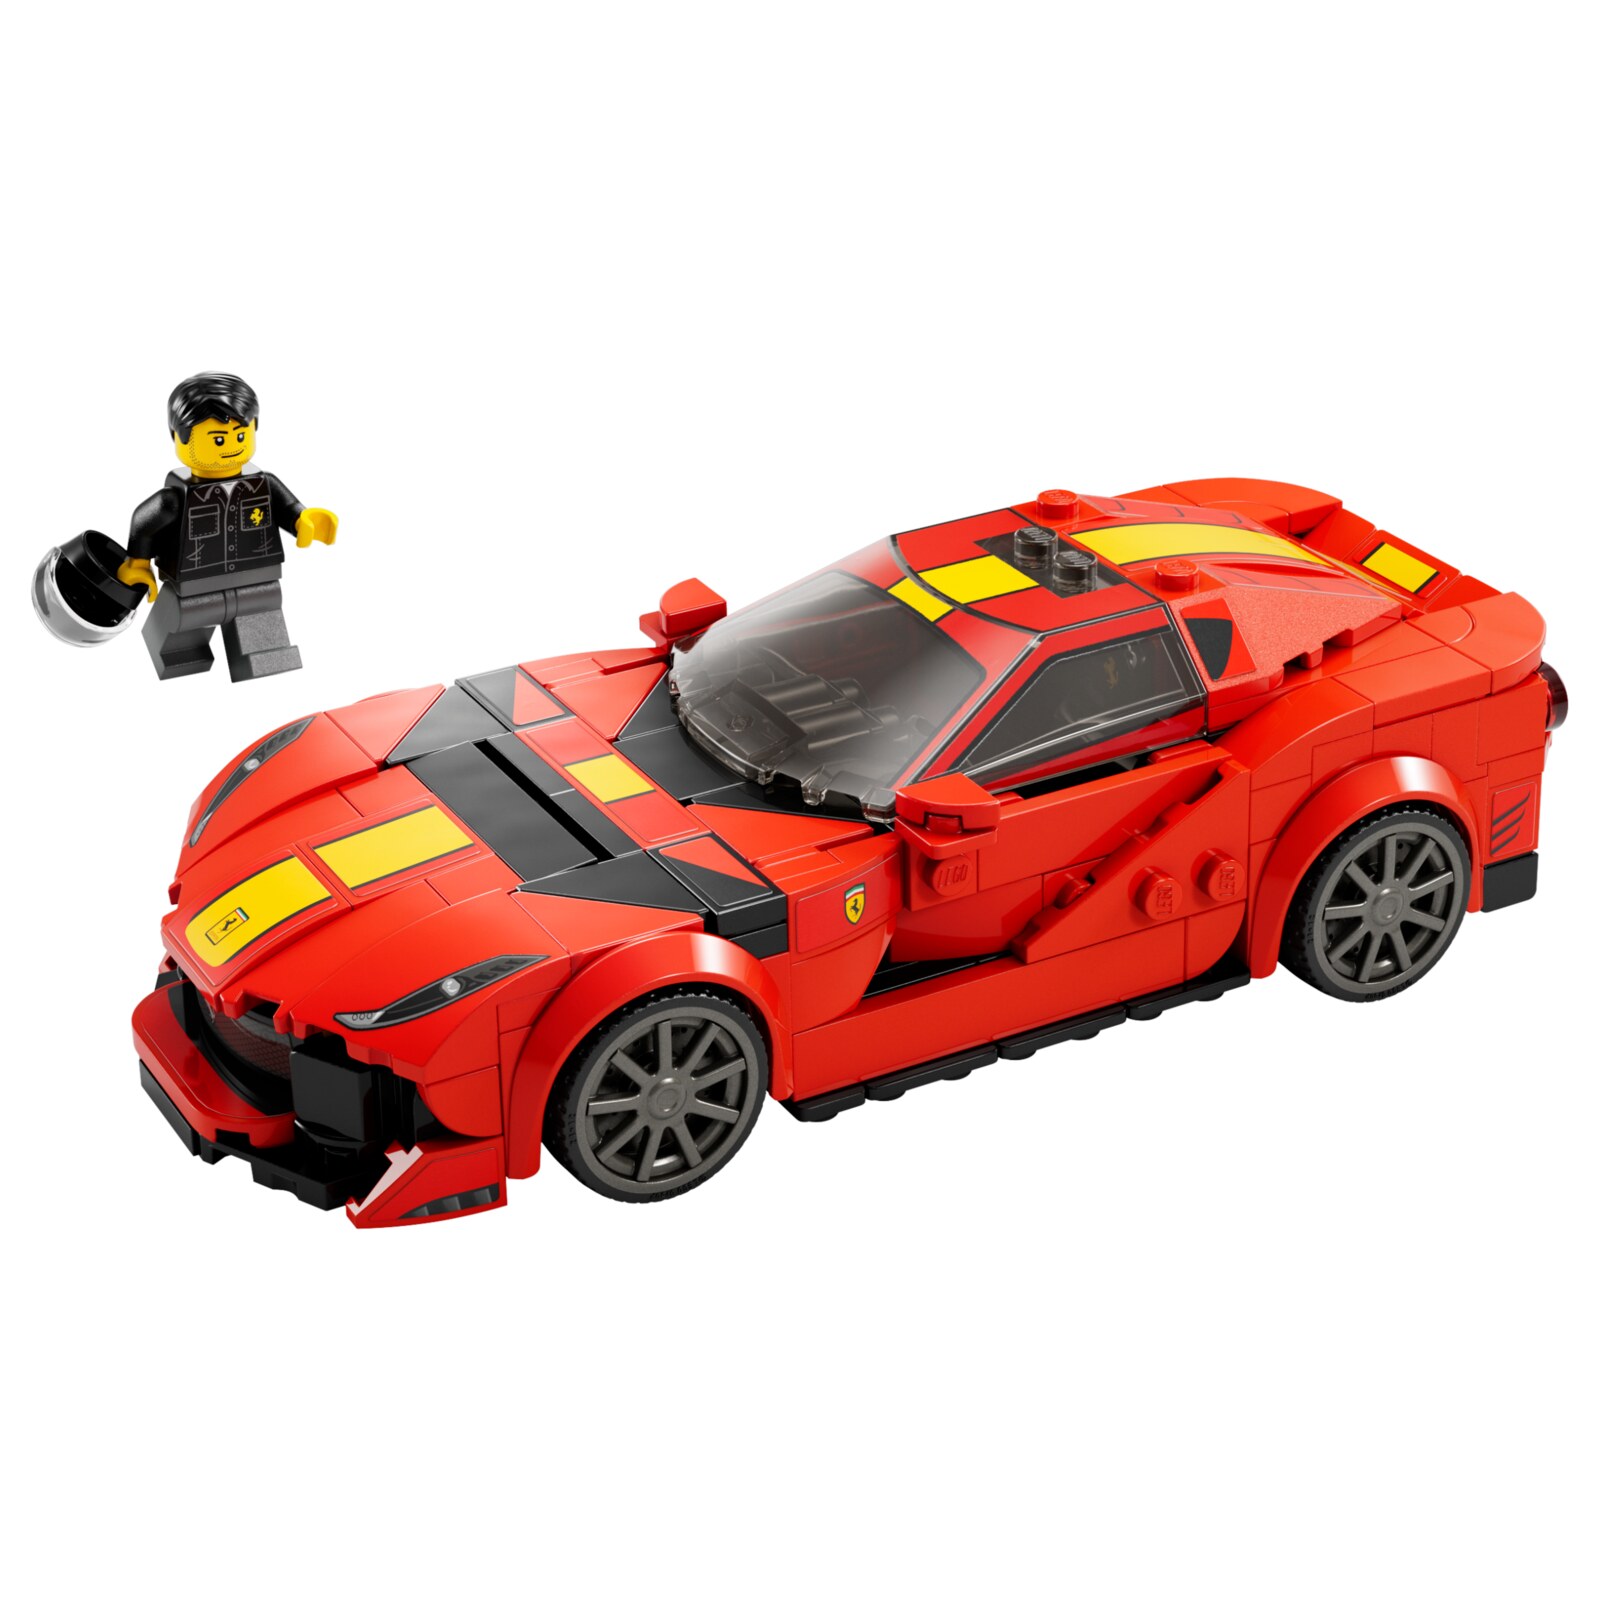 Конструктор LEGO Speed Champions Ferrari 812 Competizione, 261 деталь, 76914 конструктор lego speed champions porsche 918 spyder 75910